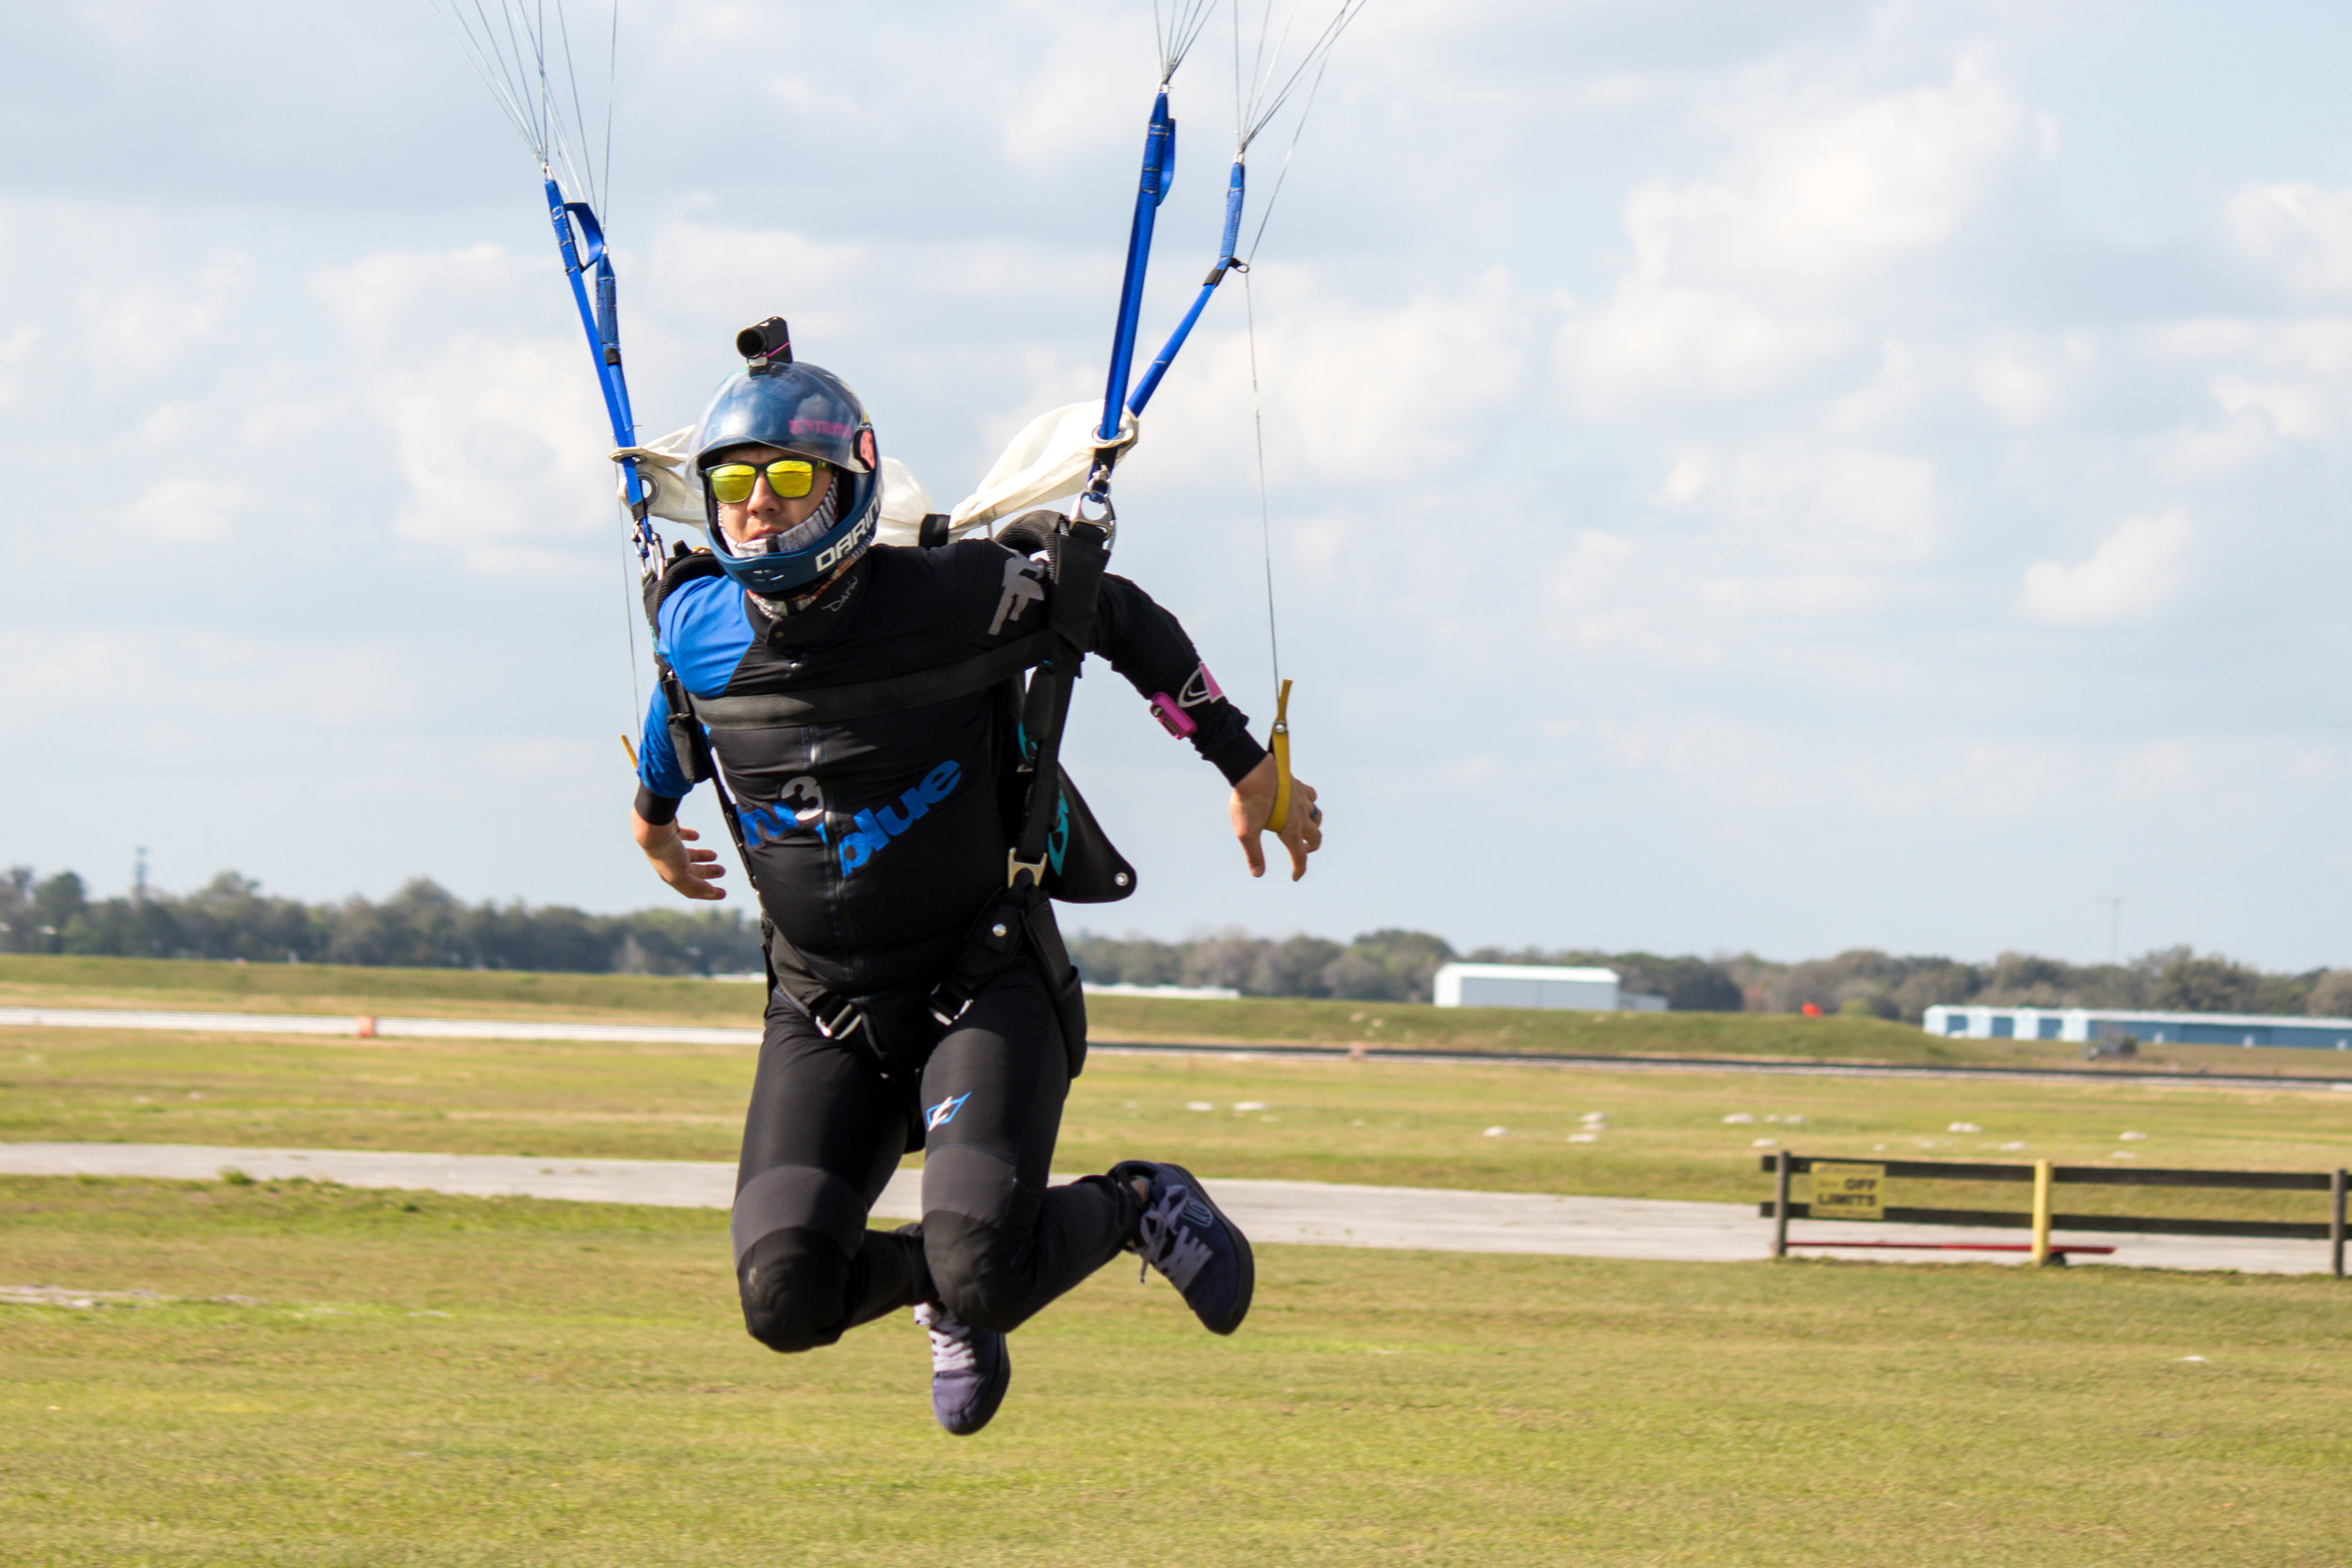 High-Kick-Photography-Florida-State-Headup-Skydiving-Record-Skydive-City-Zephryhills-ZHills-Florida-LR-1.jpg